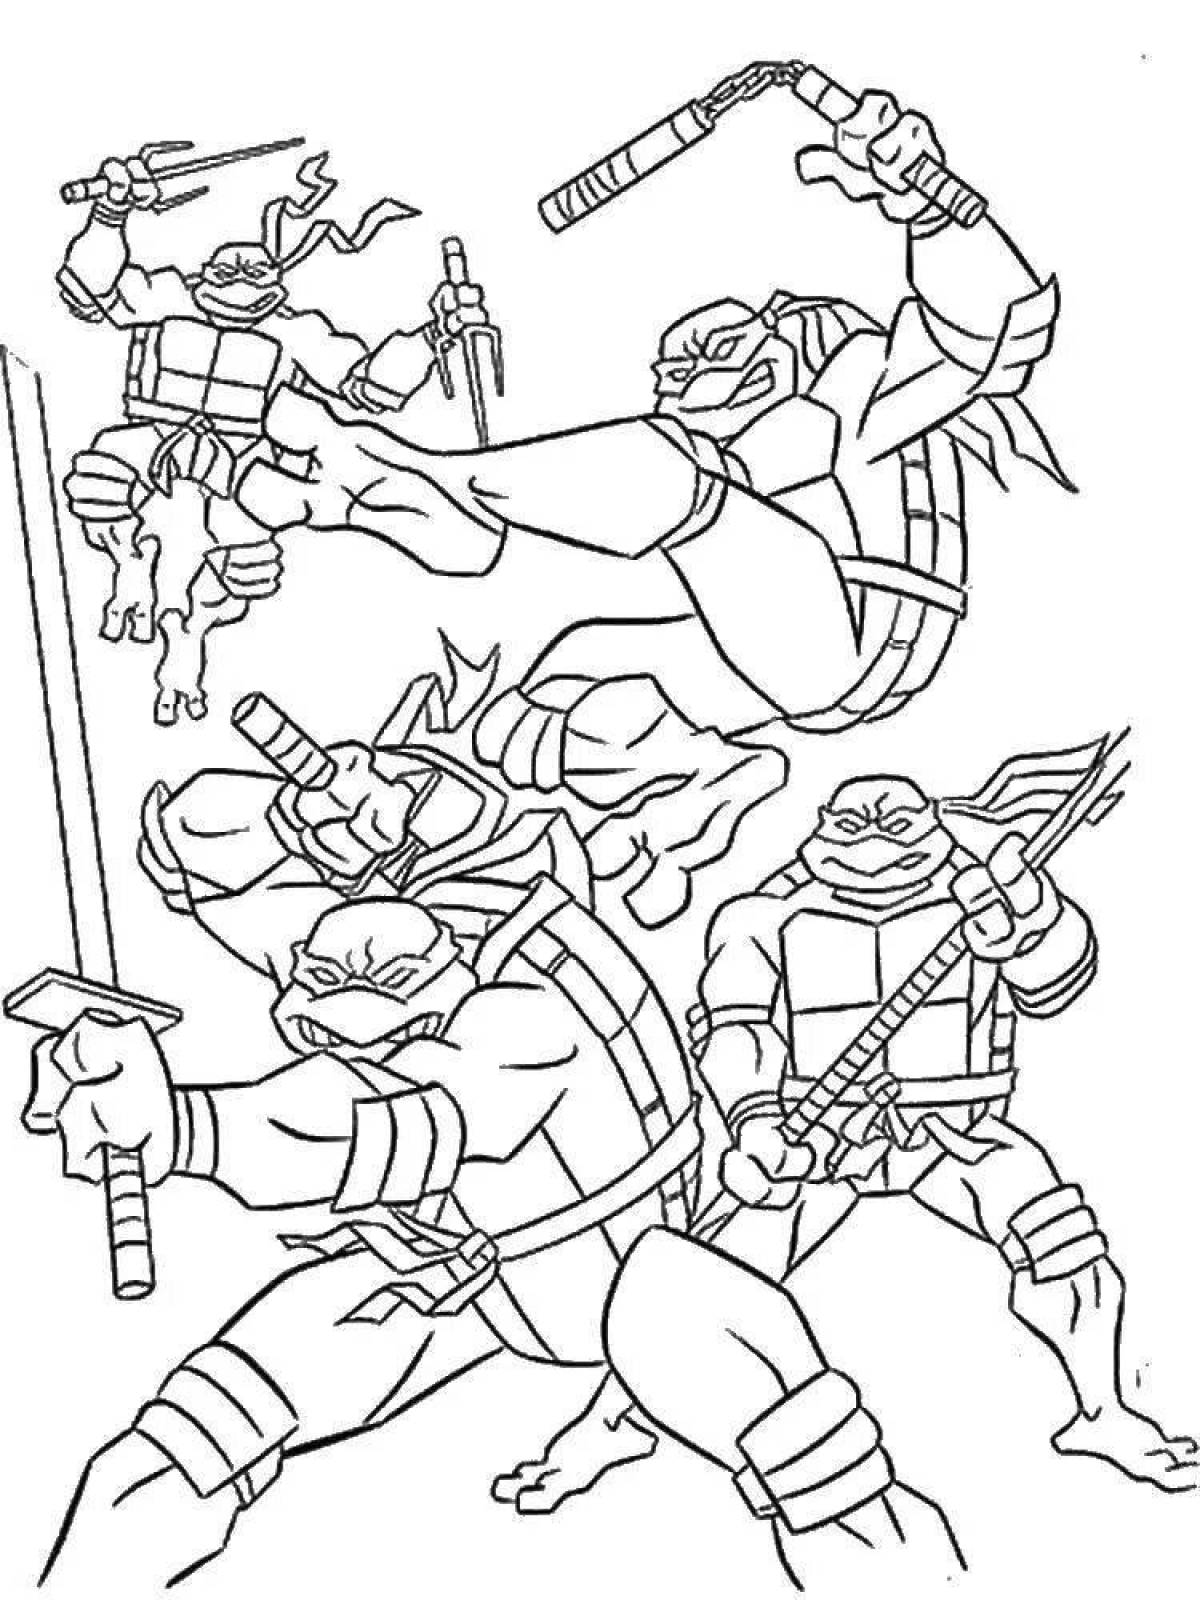 Ninja Turtles playful coloring page